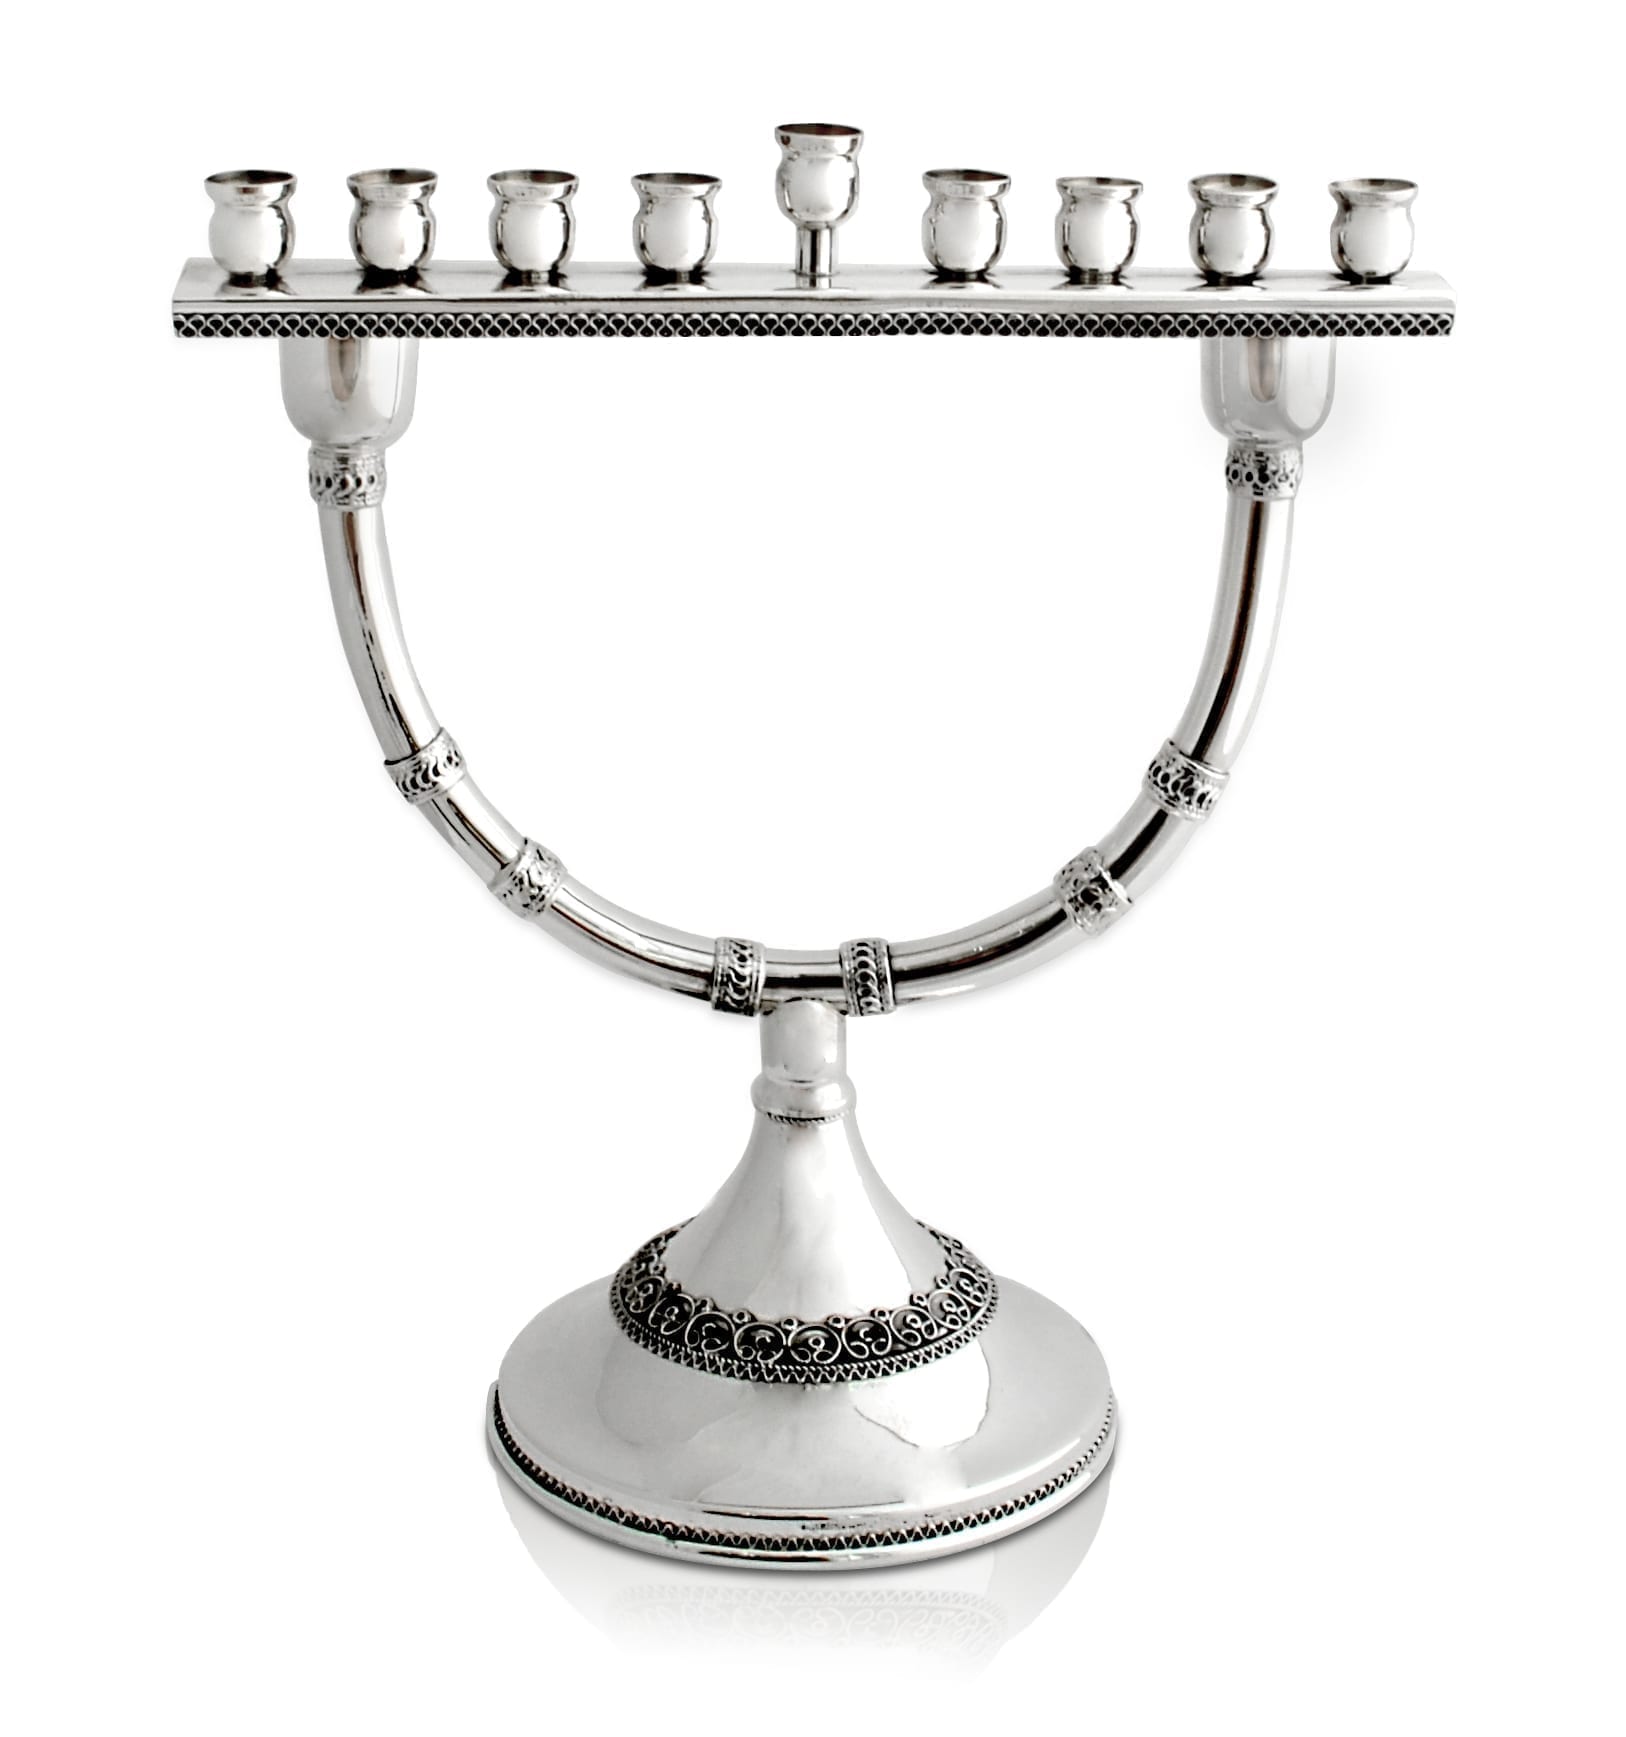 Silver Jewish menorah candle set